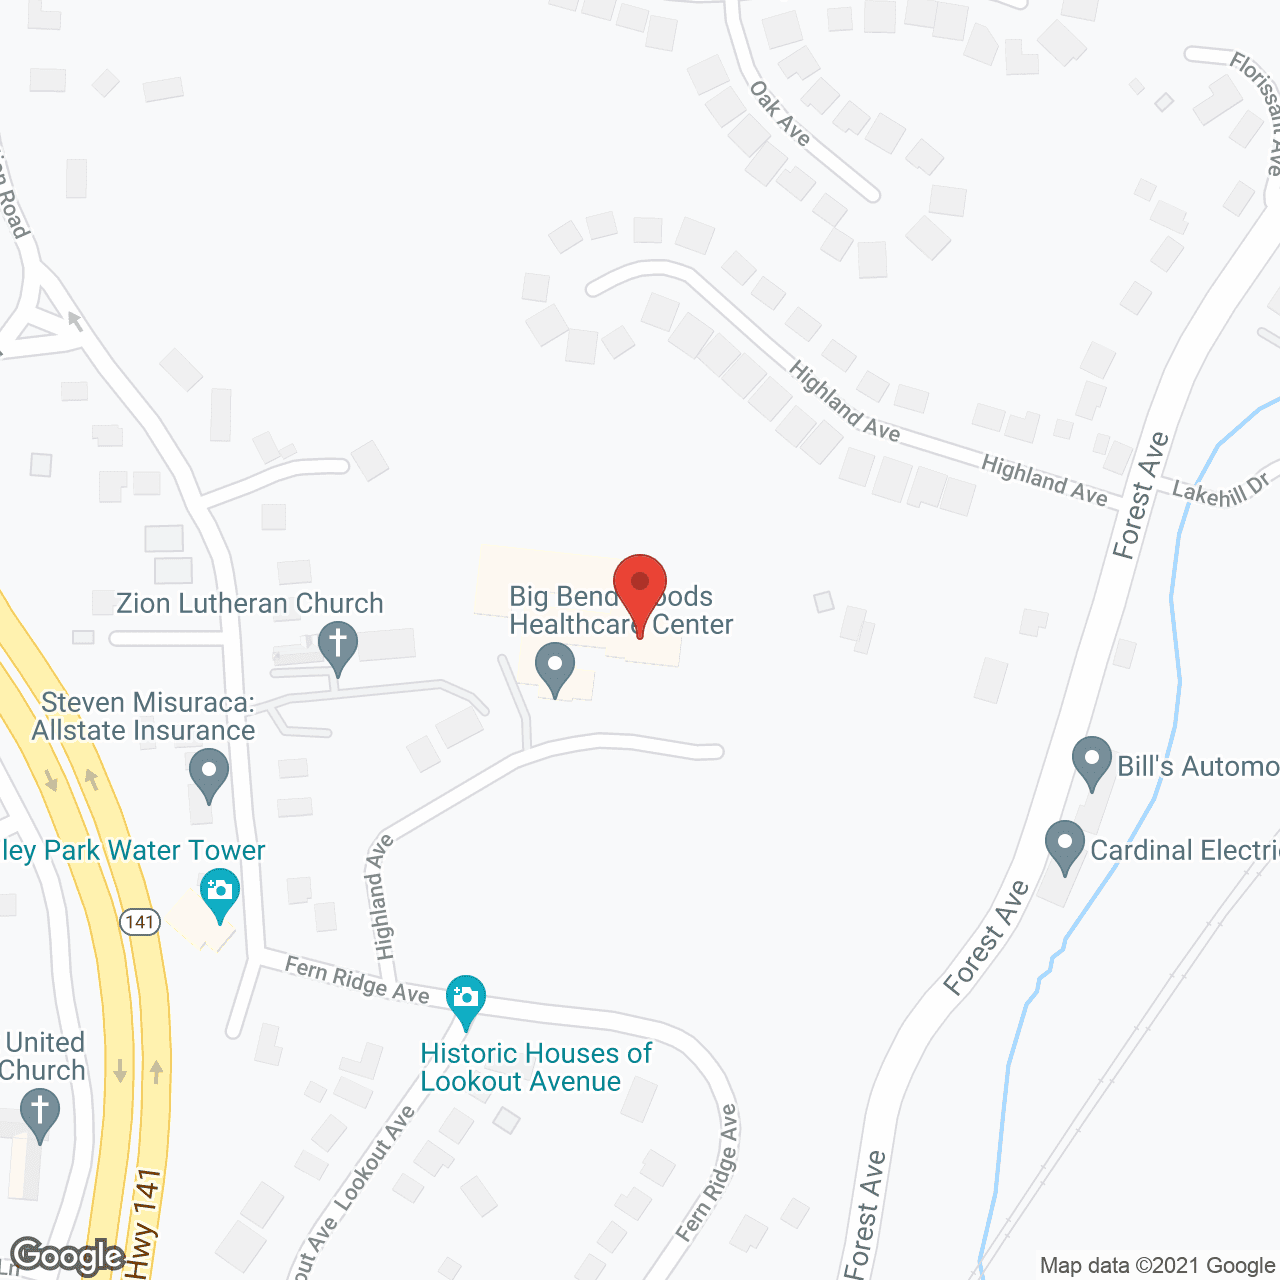 Big Bend Woods Healthcare Center in google map